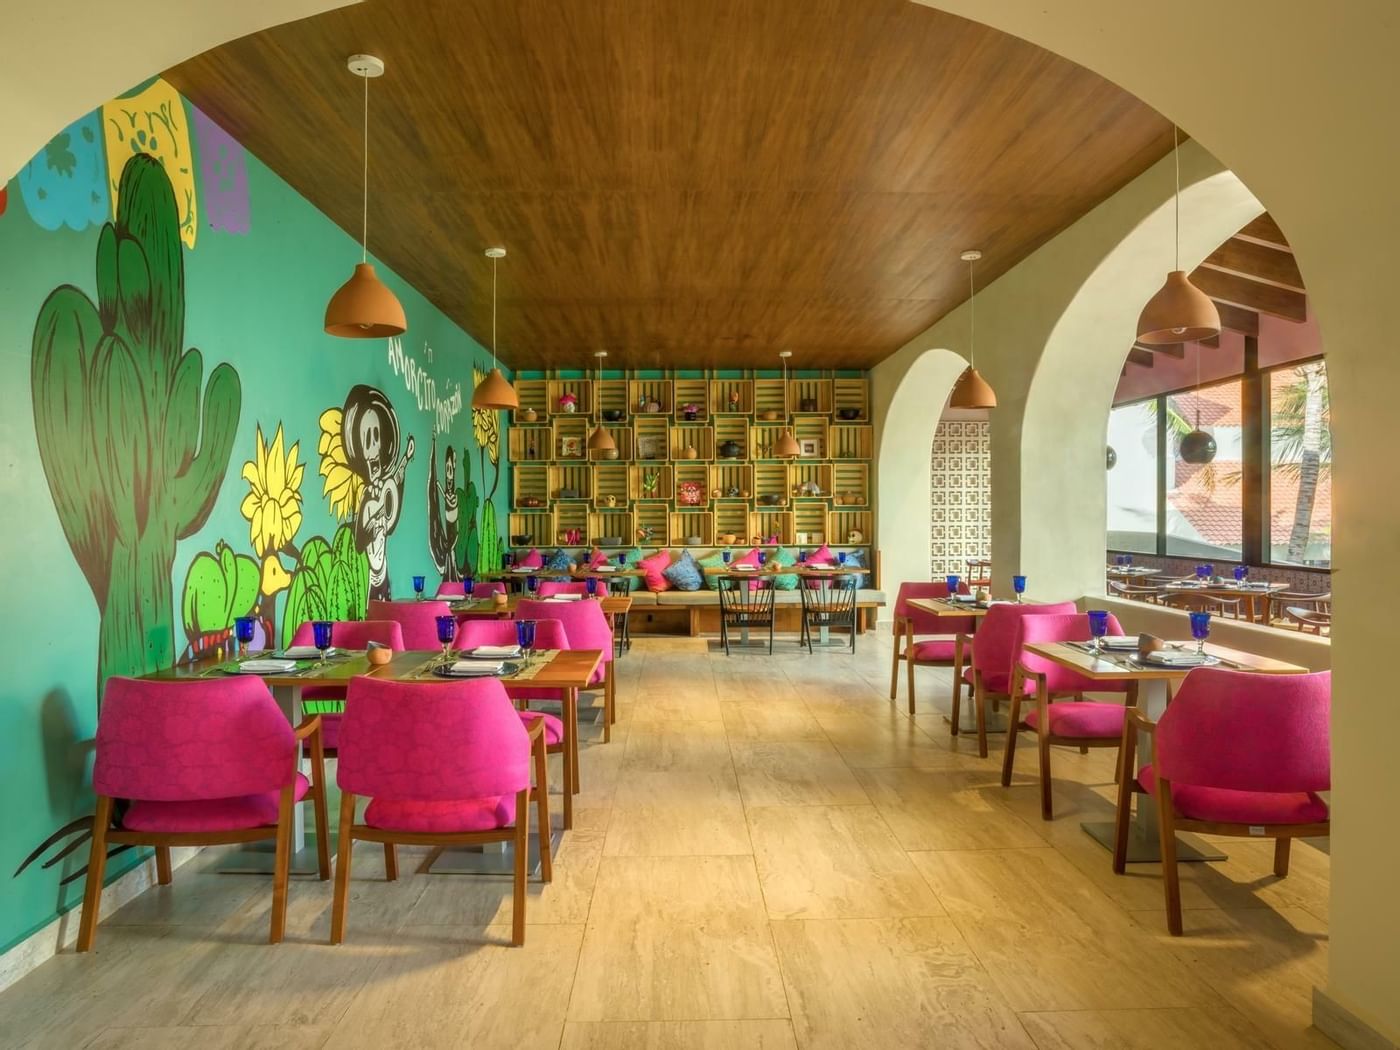 El Mexicano dining area at FA Hotels & Resorts